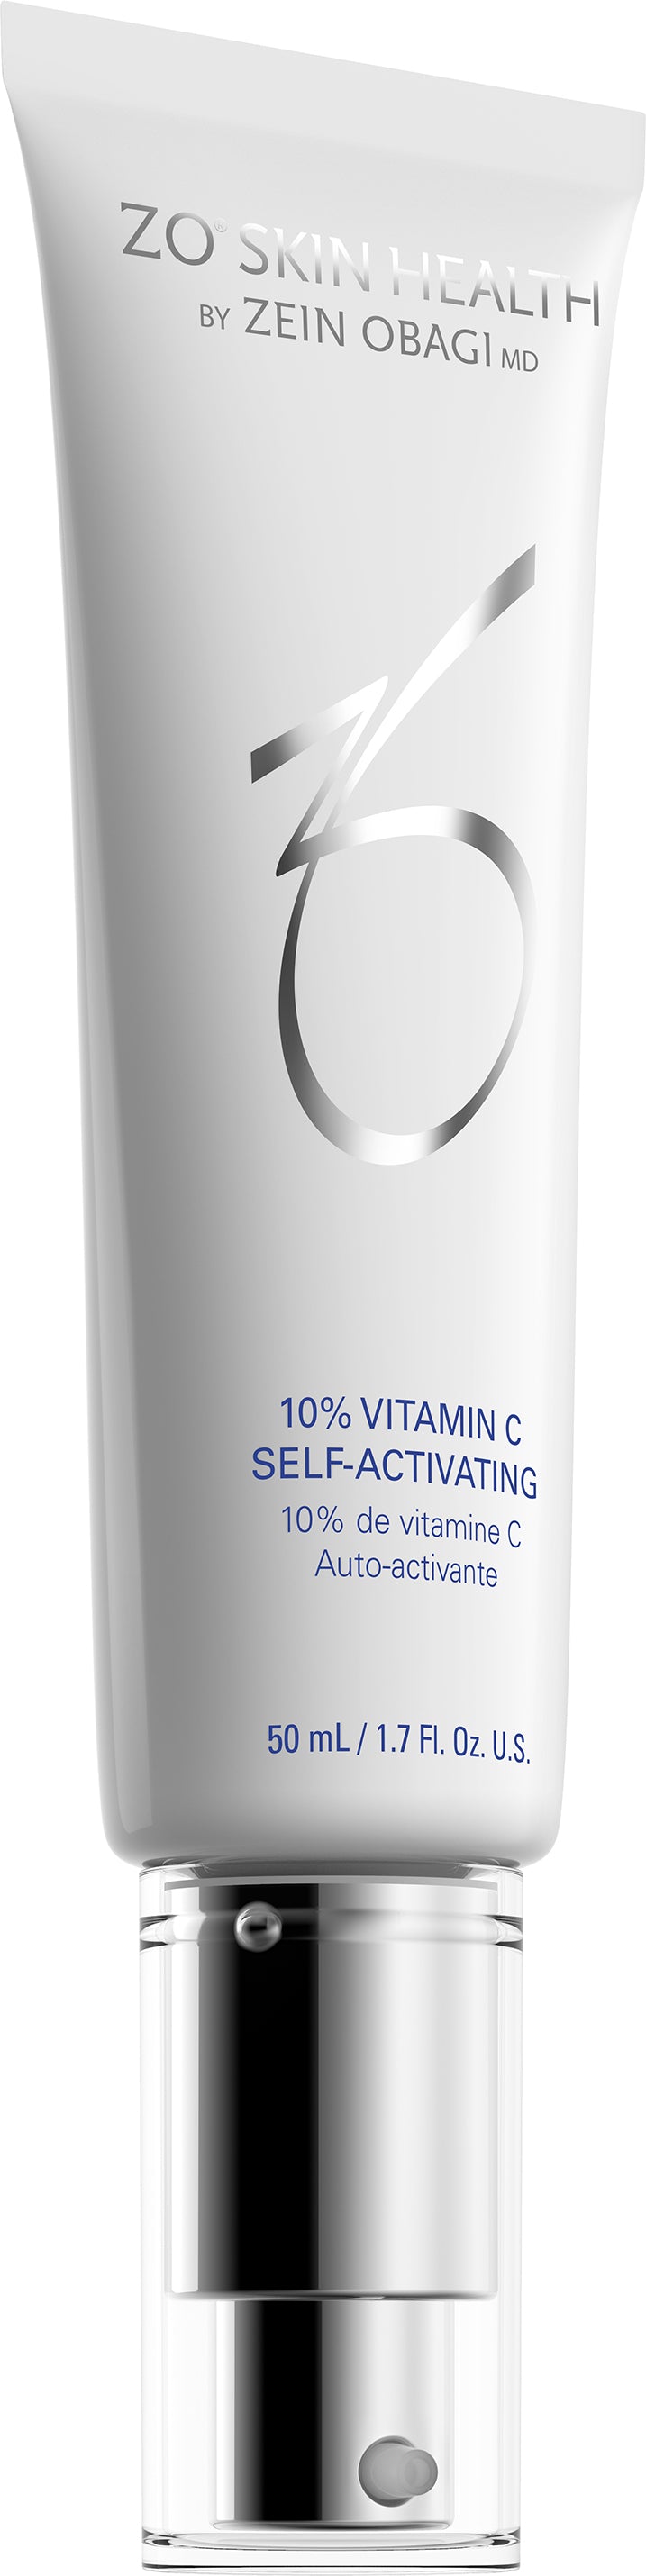 ZO SKIN HEALTH 10% Vitamin C Self Activating 50ml - $190